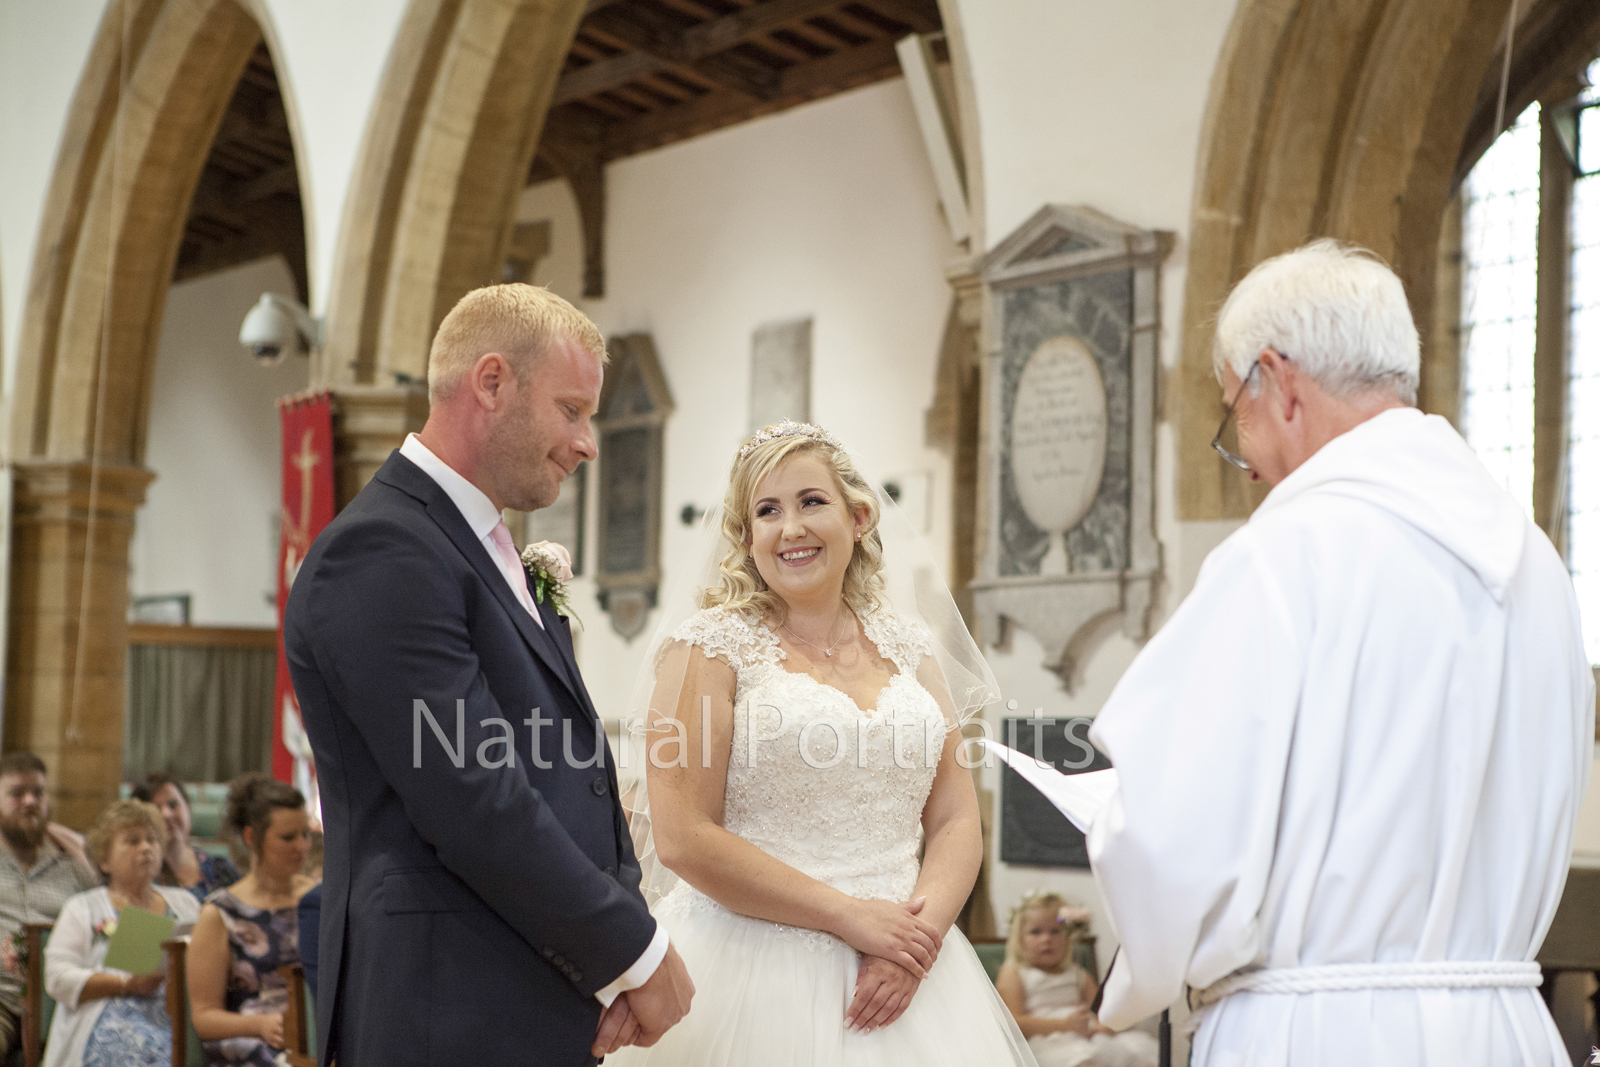 Wedding ceremony at Somerton Church